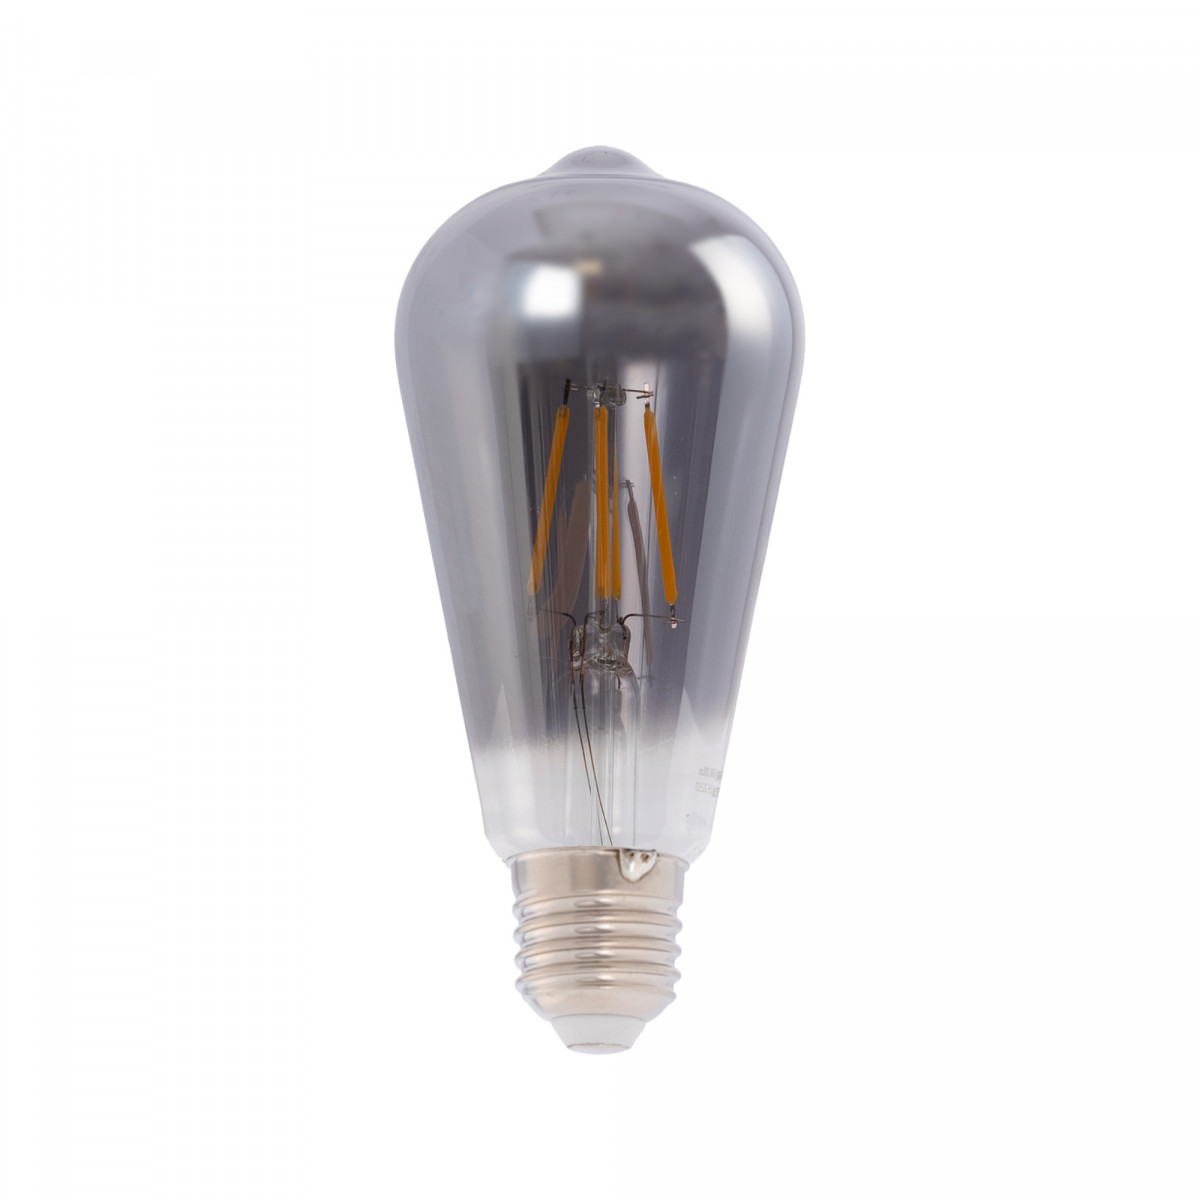 Decorative smoked light bulb "Smoky" - E27 ST64 - 4W - 3000K